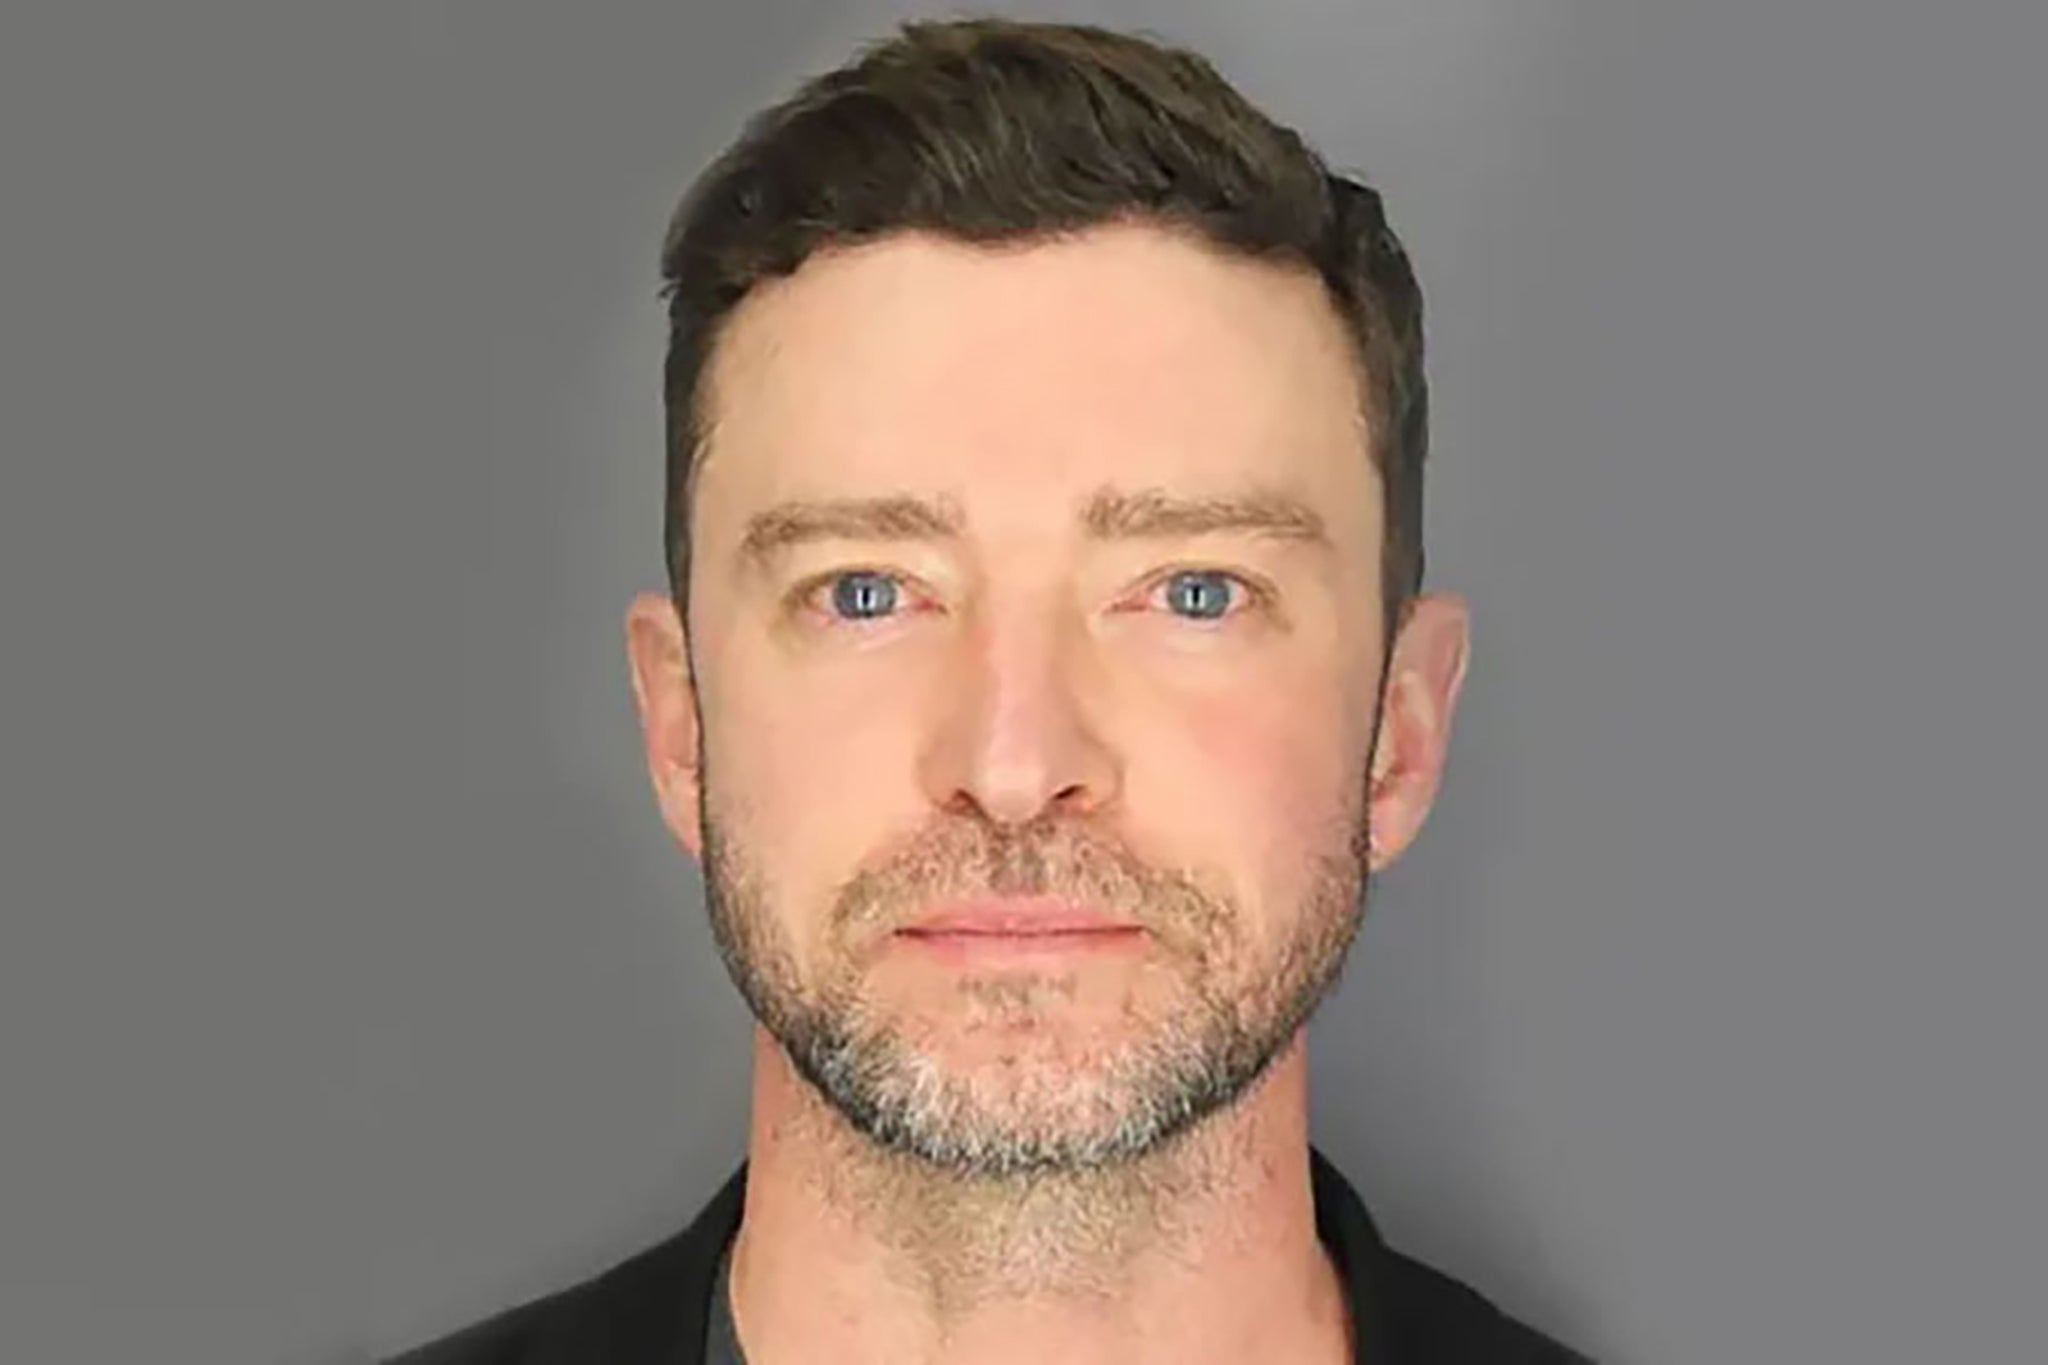 Timberlake’s mugshot following his arrest